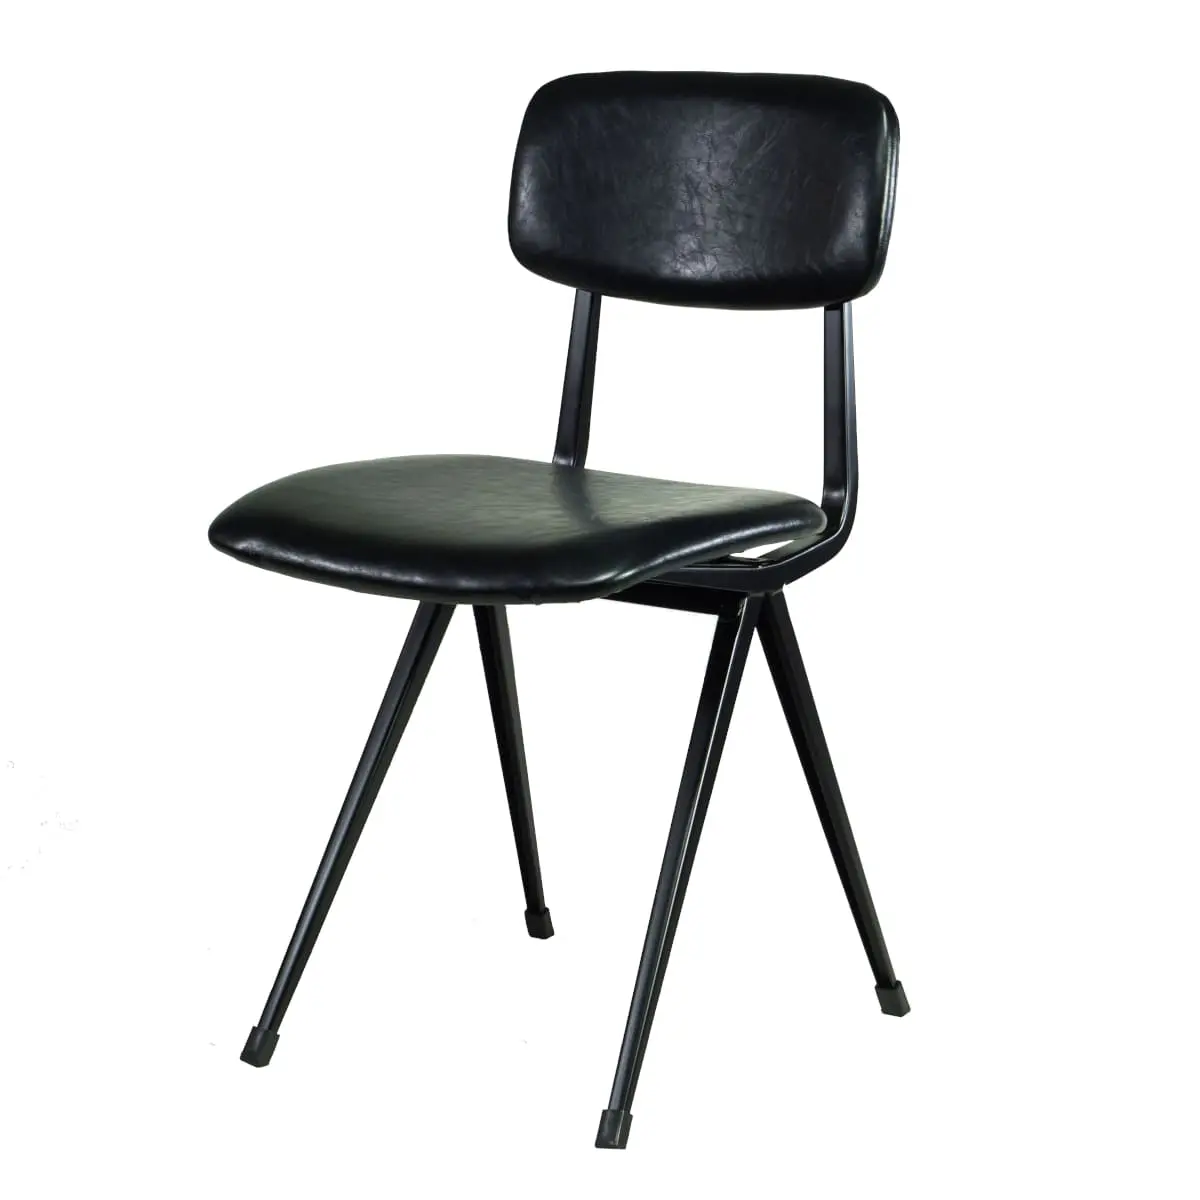 Friso Kremer Stuhl Design schwarz gepolstert, Old School vintage retro Stuhl Esszimmer